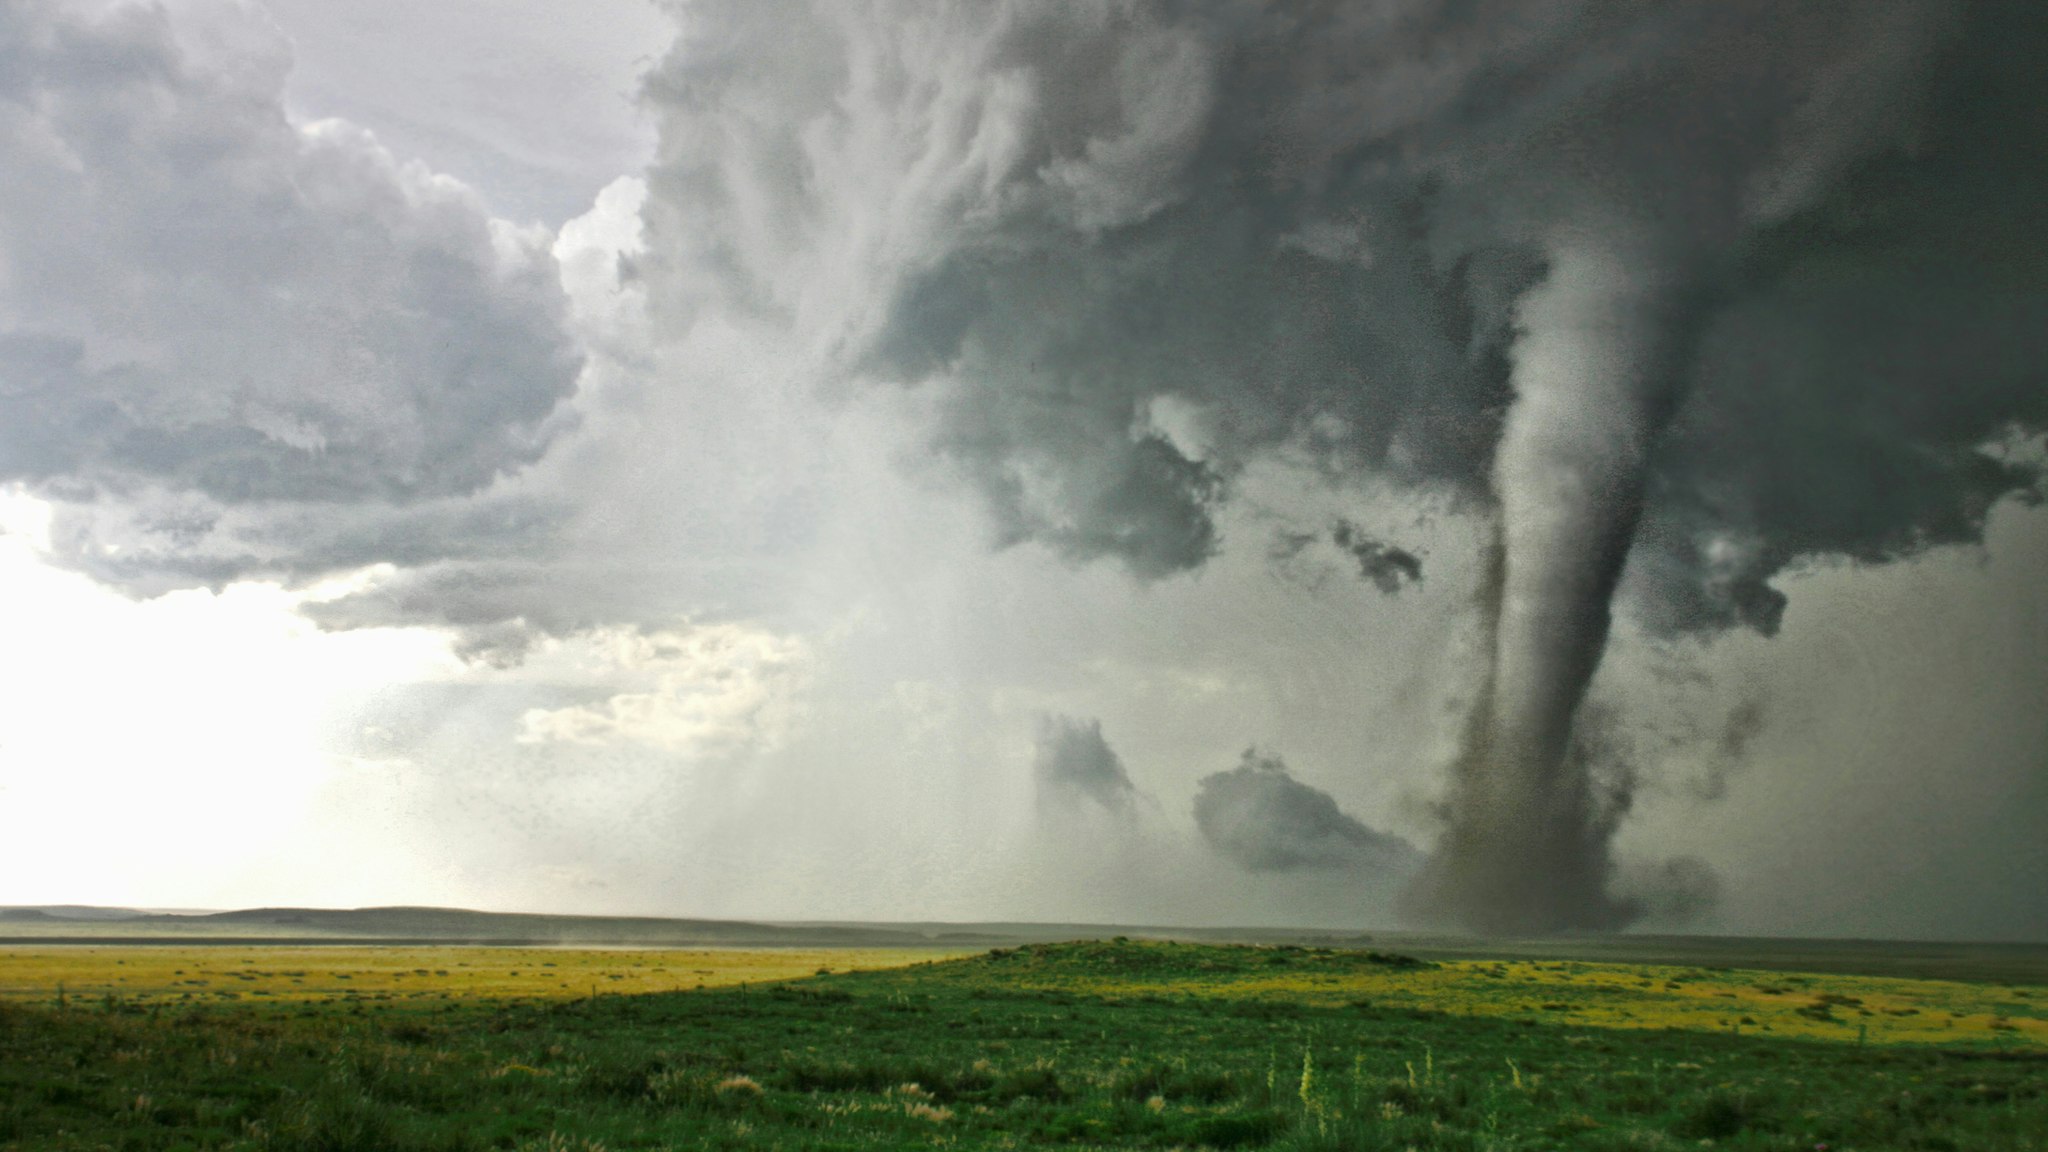 Tornado column in rural landscape - stock photo